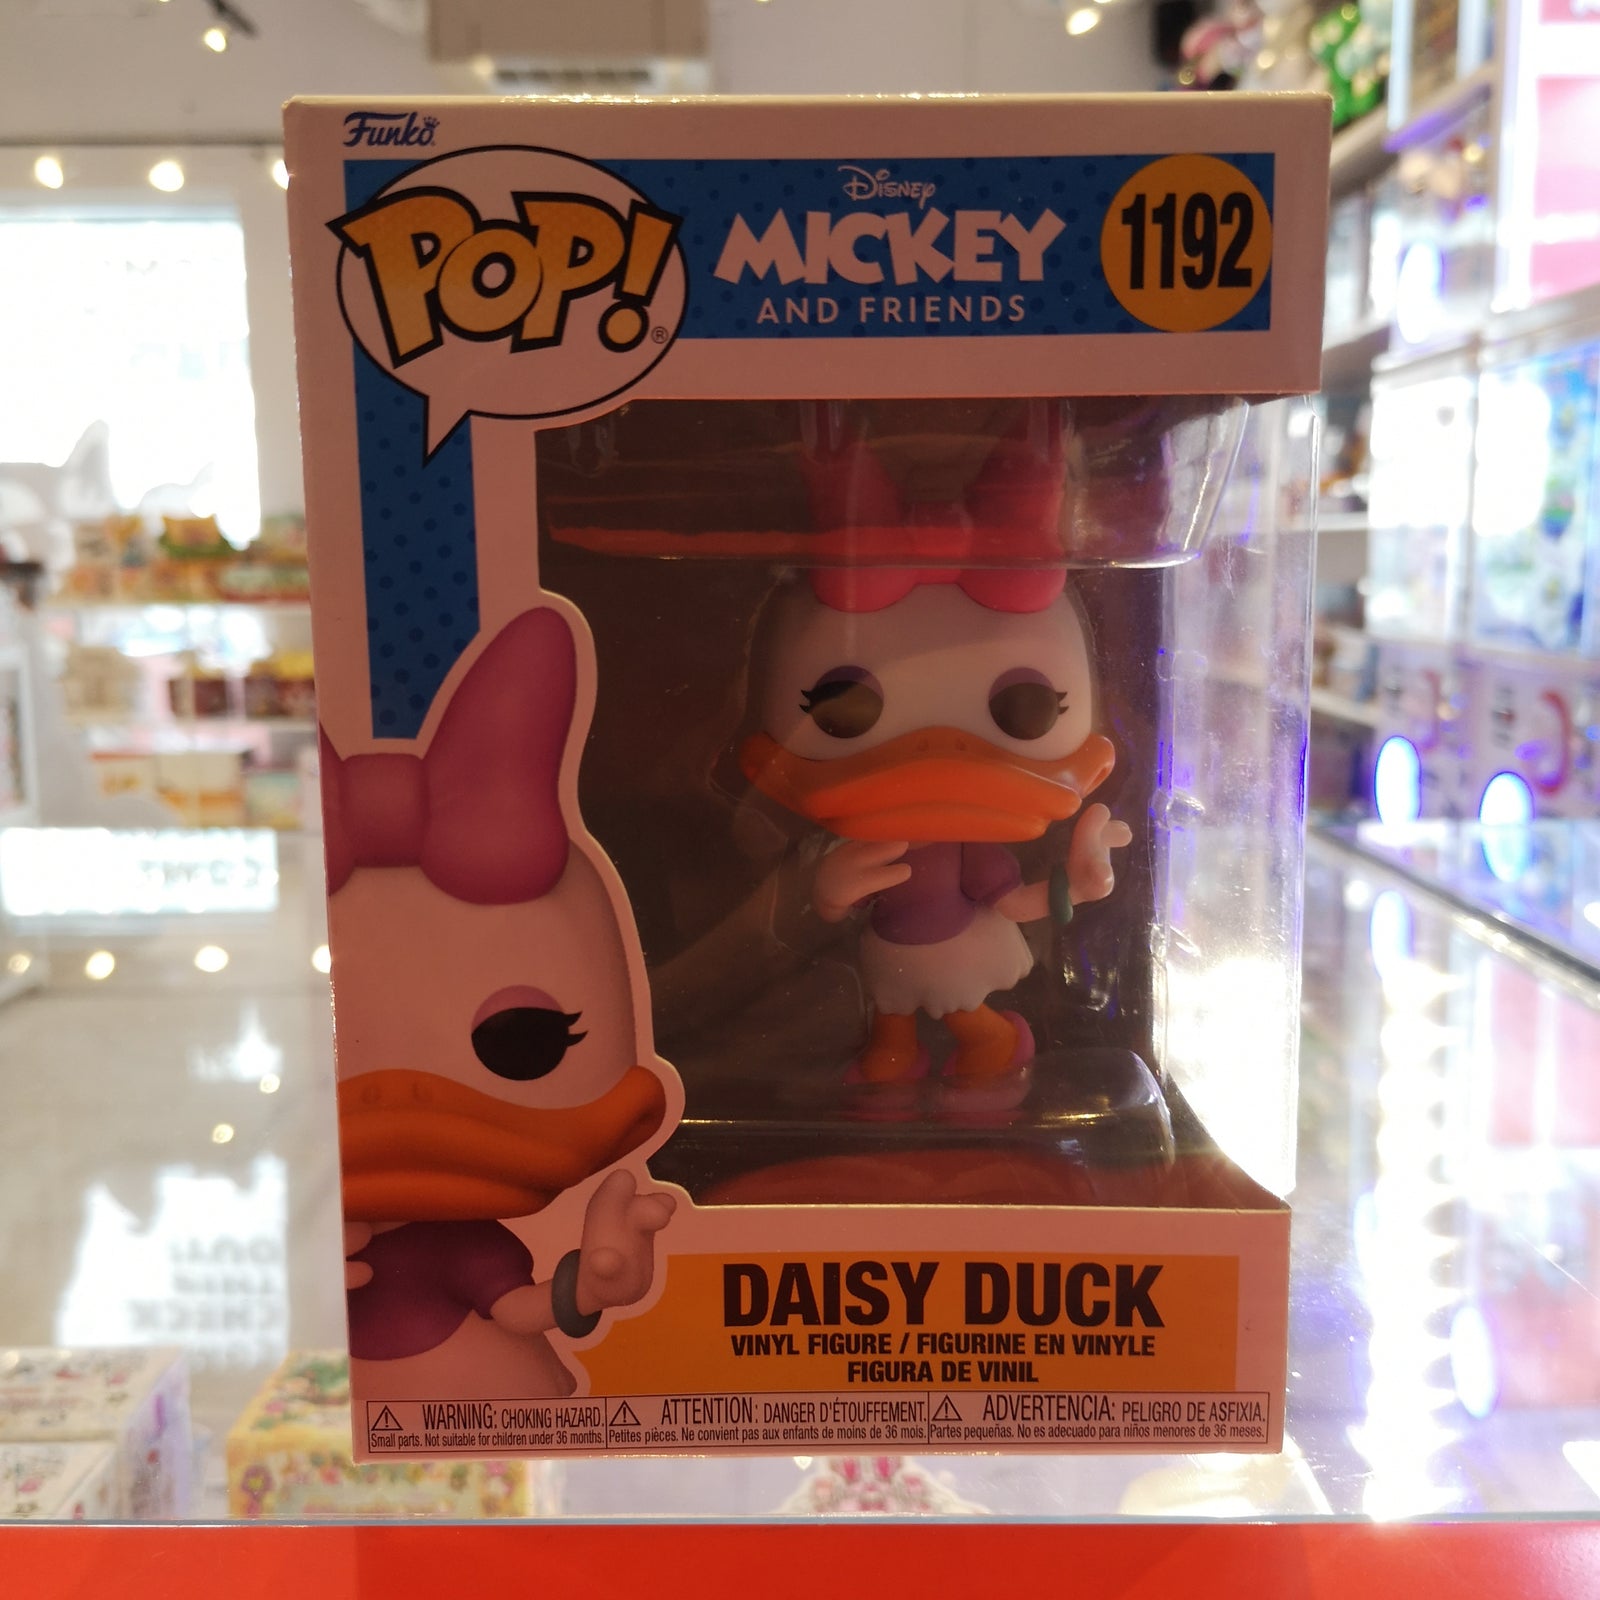 Daisy Duck - Mickey and Friends Funko POP! by Funko